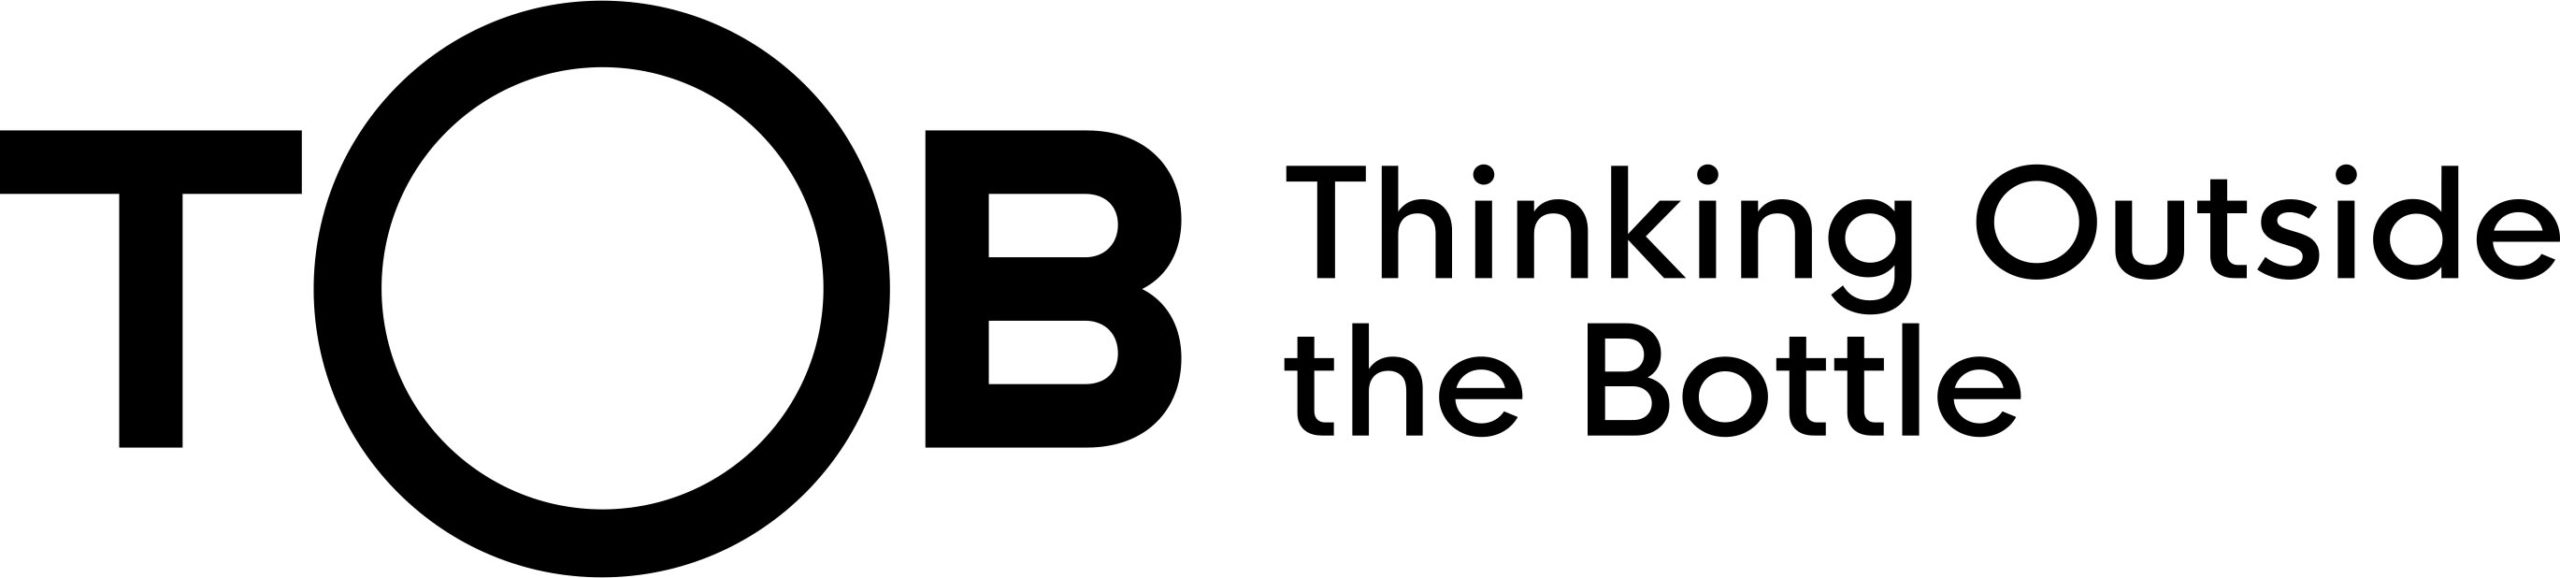 logo TOB